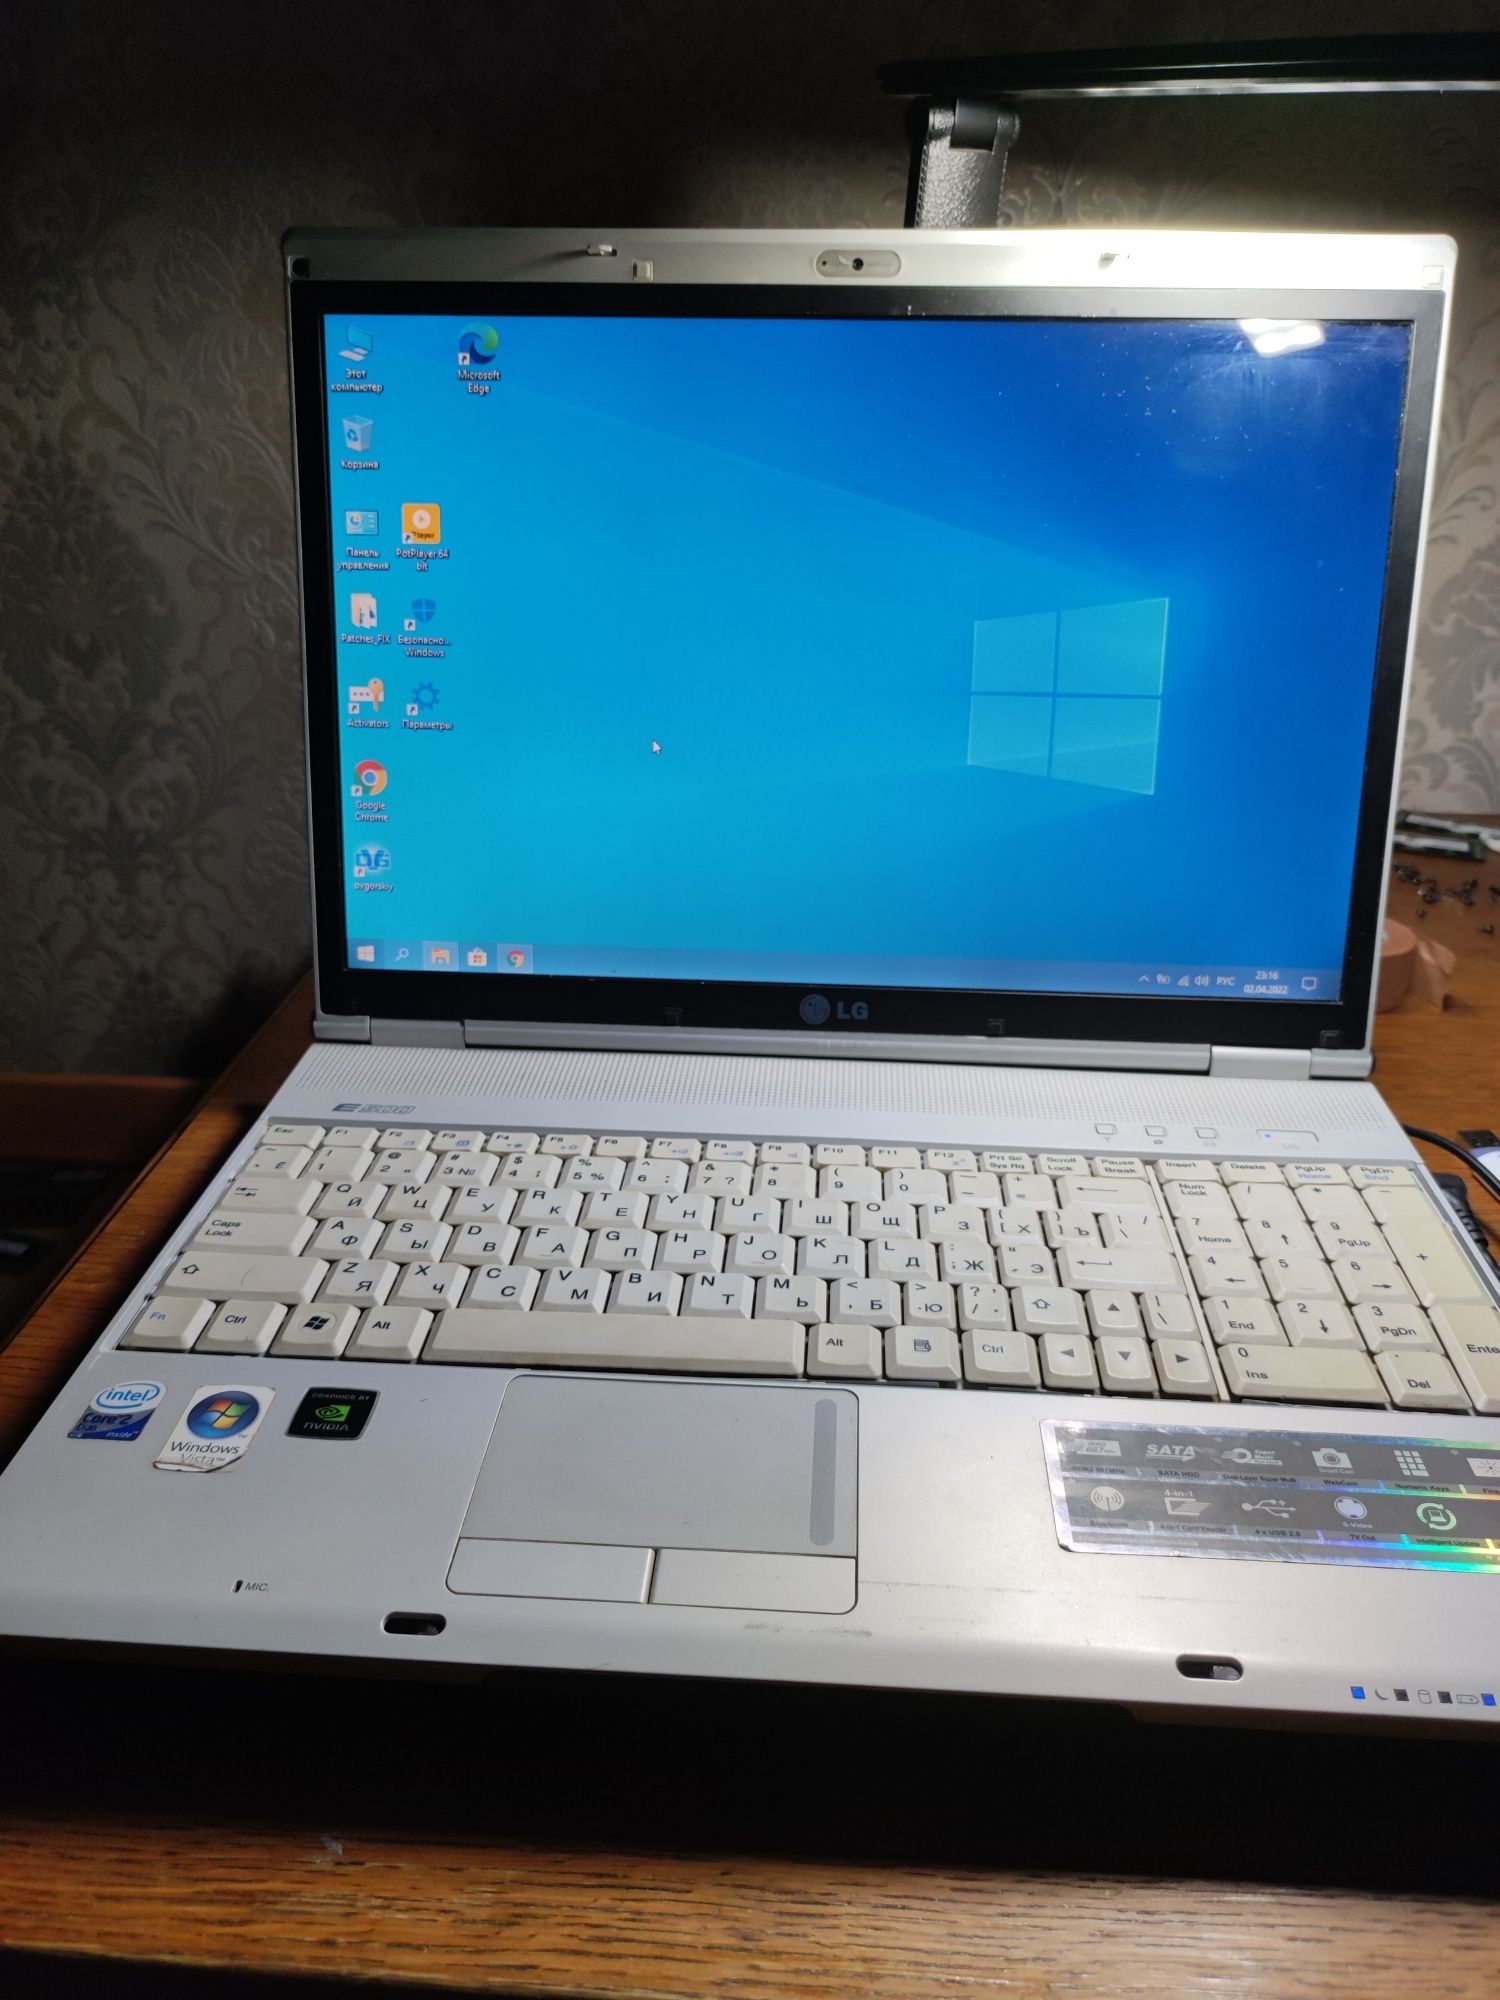 LG E500 ноутбук с блоком питания + Windows 10 64bit +